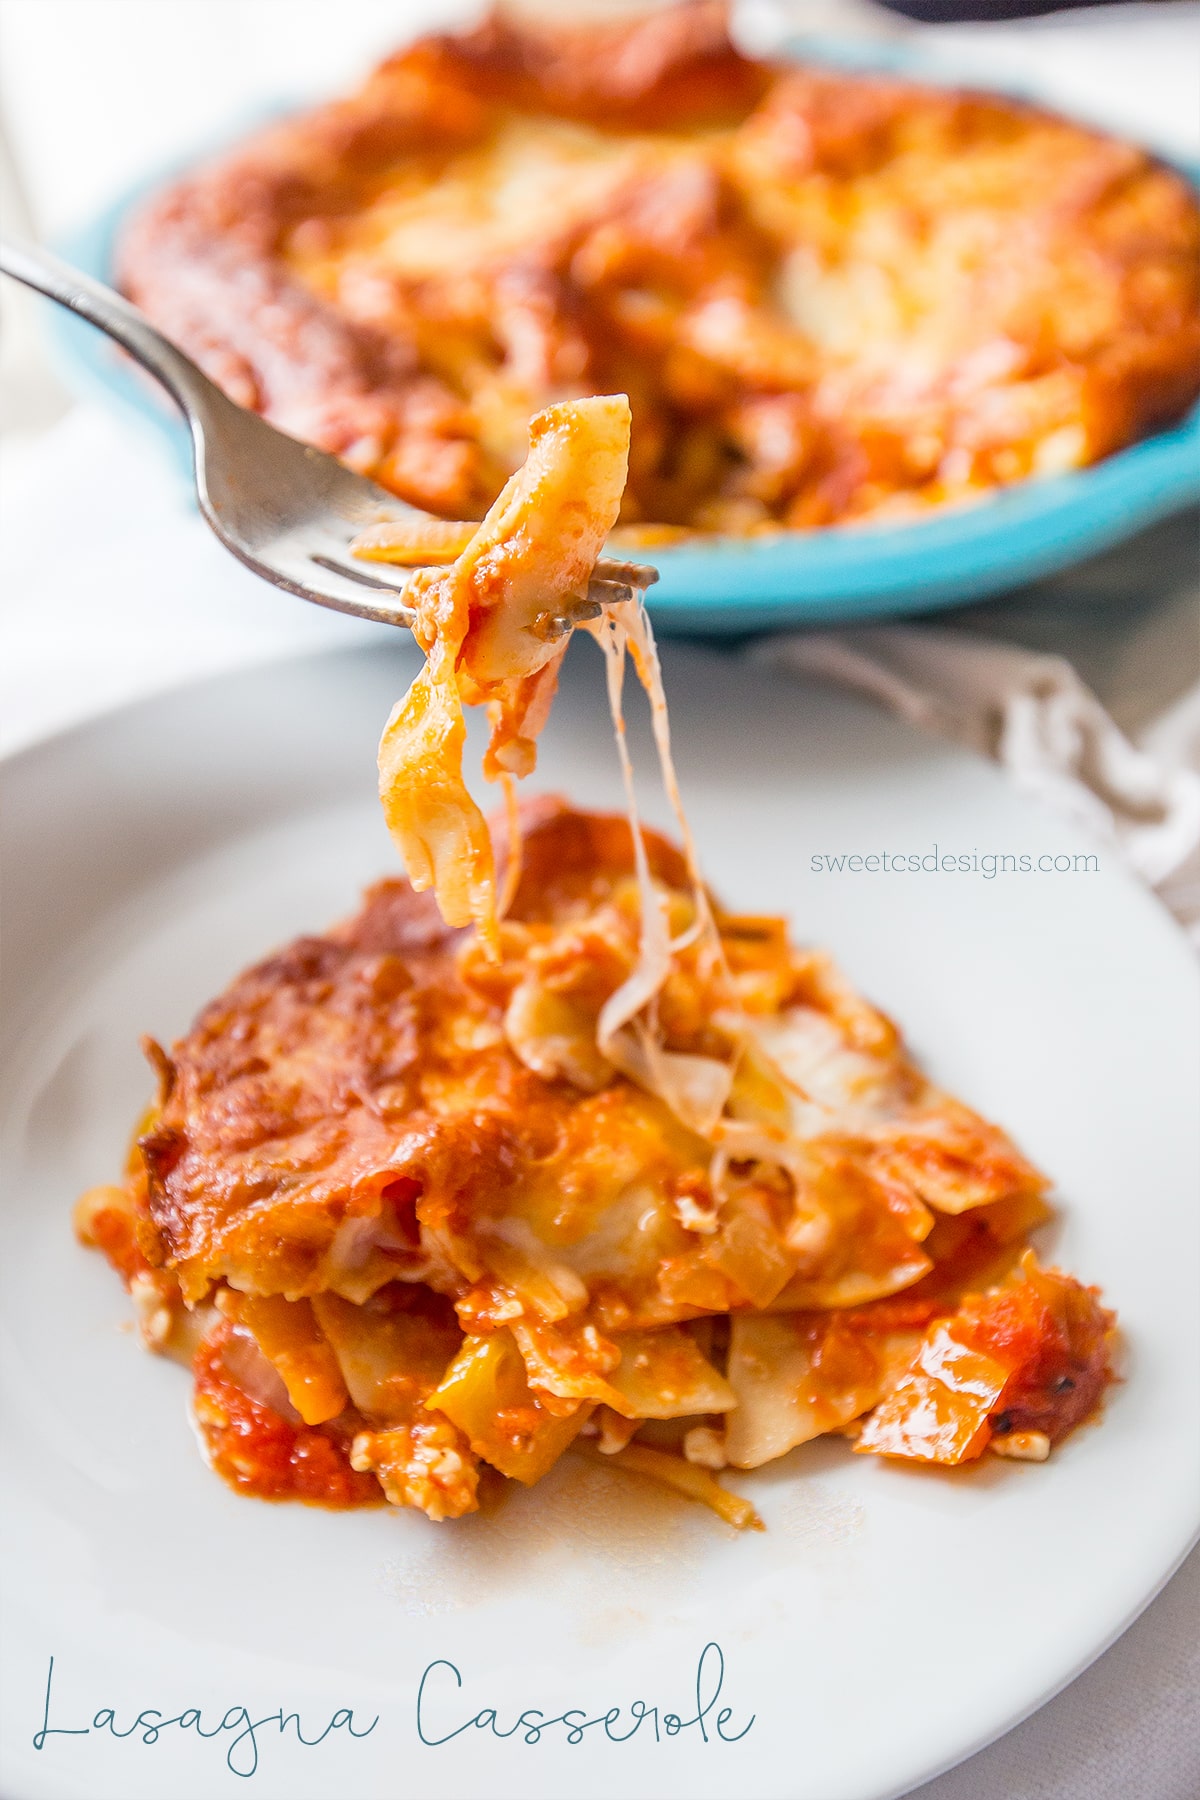 Lasagna Casserole- quick, easy, so good!